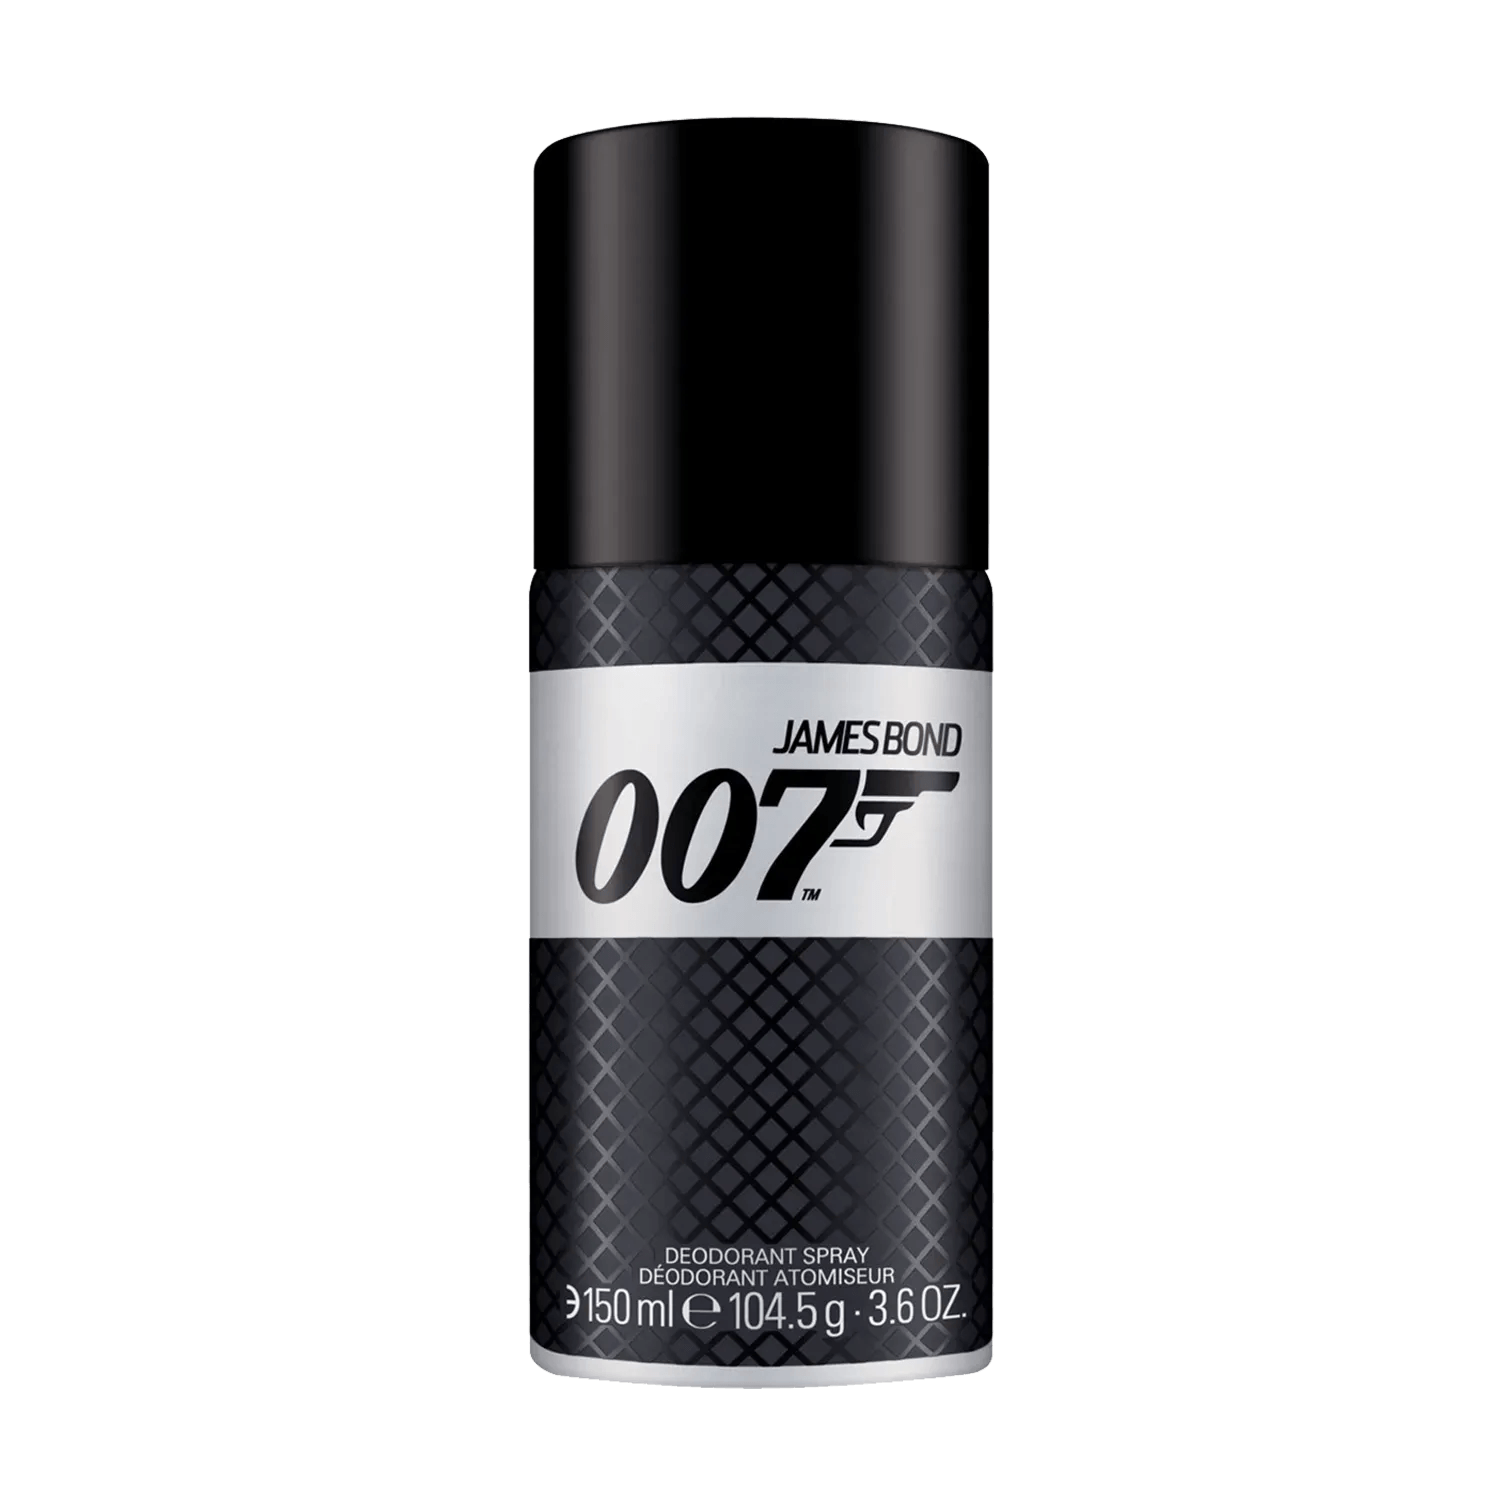 James Bond 007 Deodorant for him (150ml)